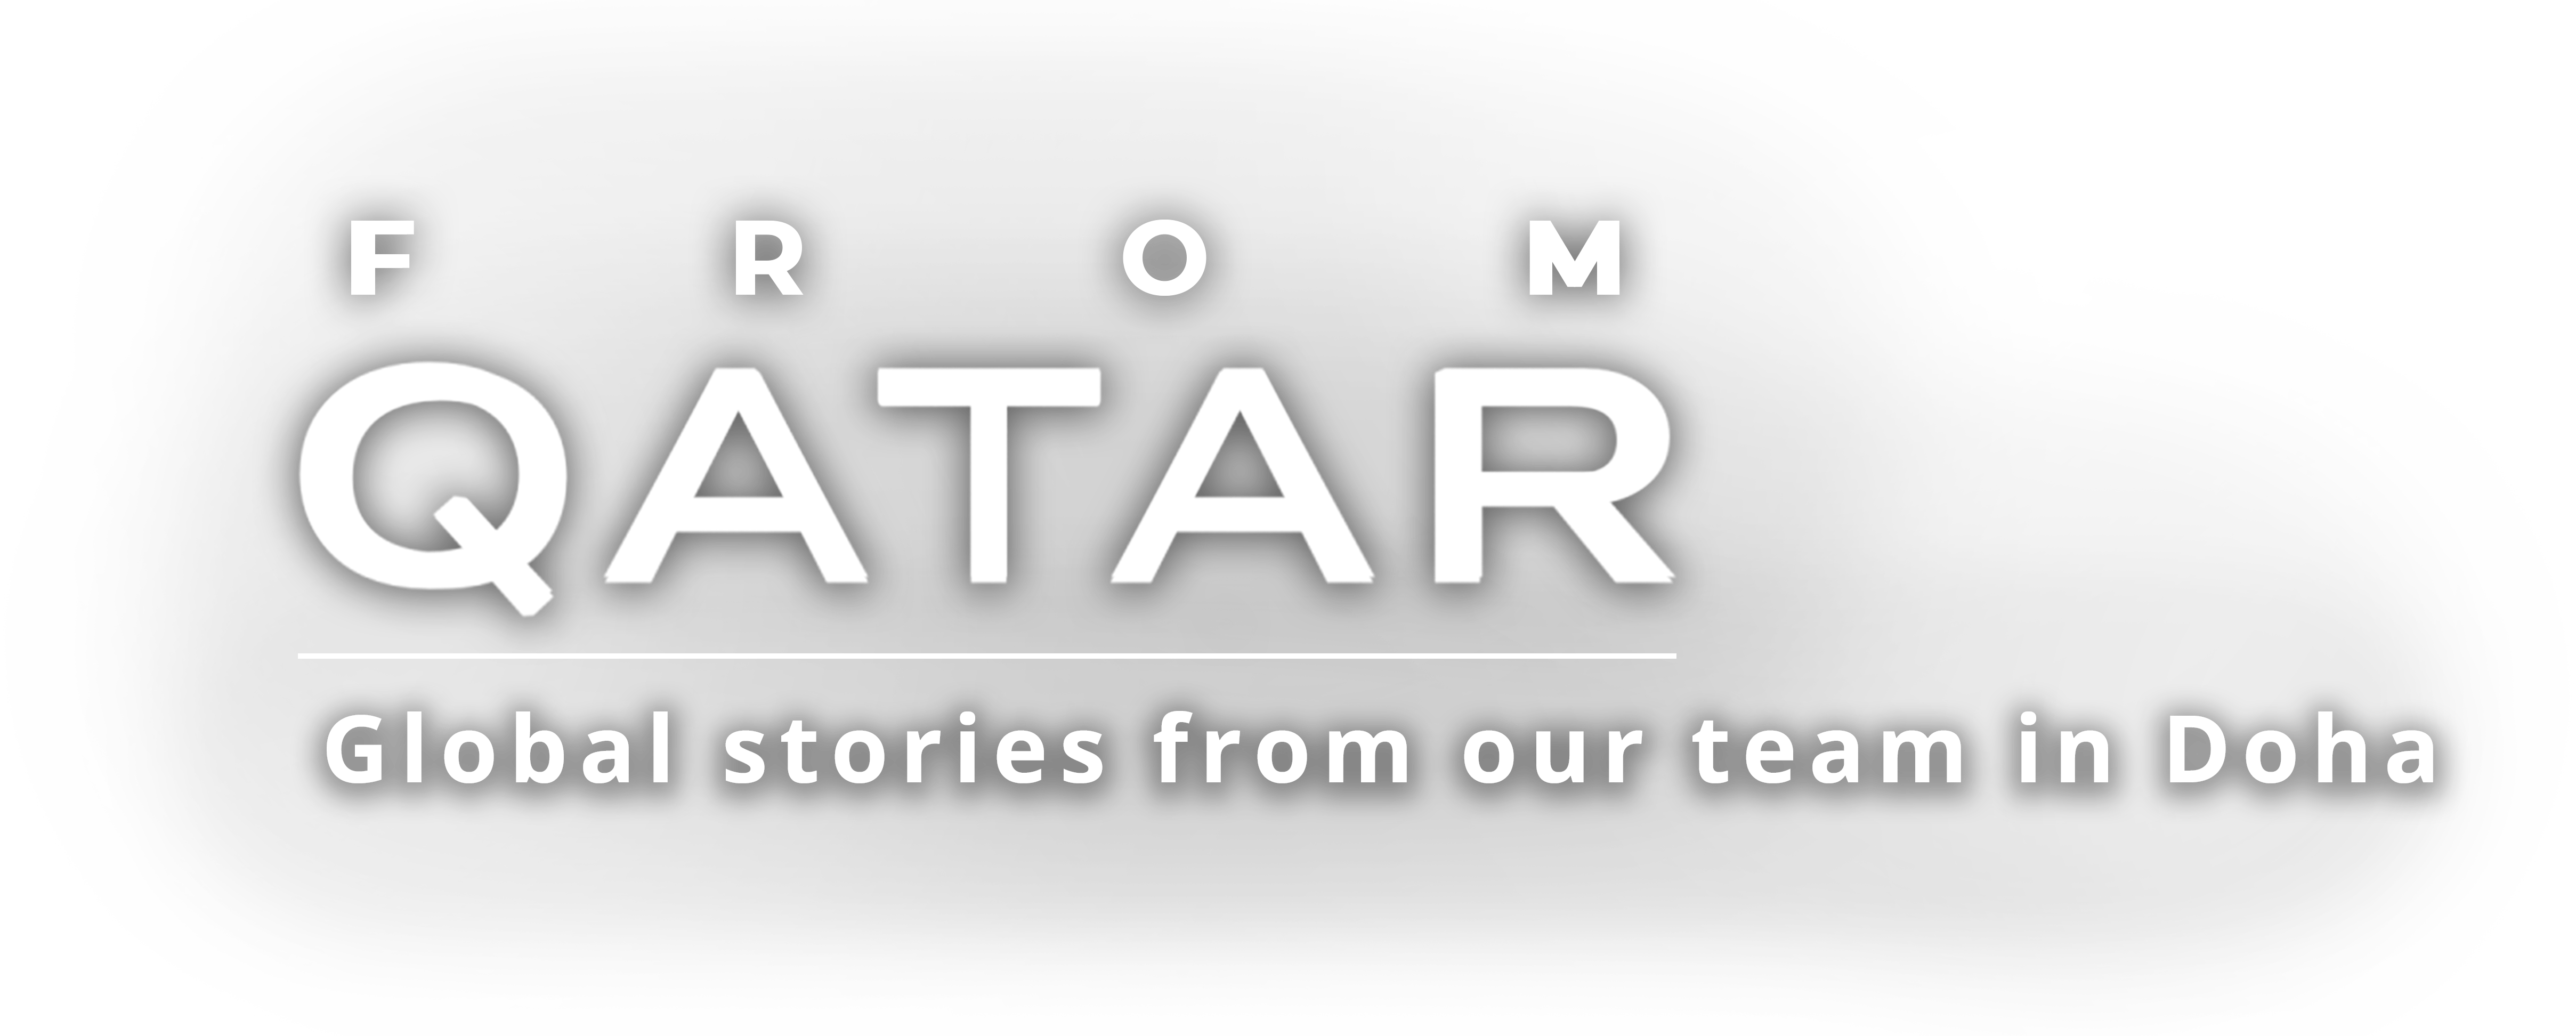 Qatar programmes